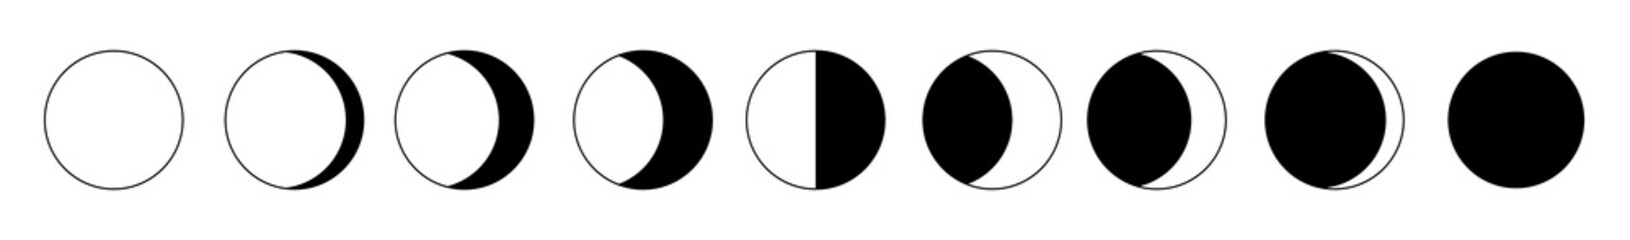 Vector illustration of minimalist moon phases